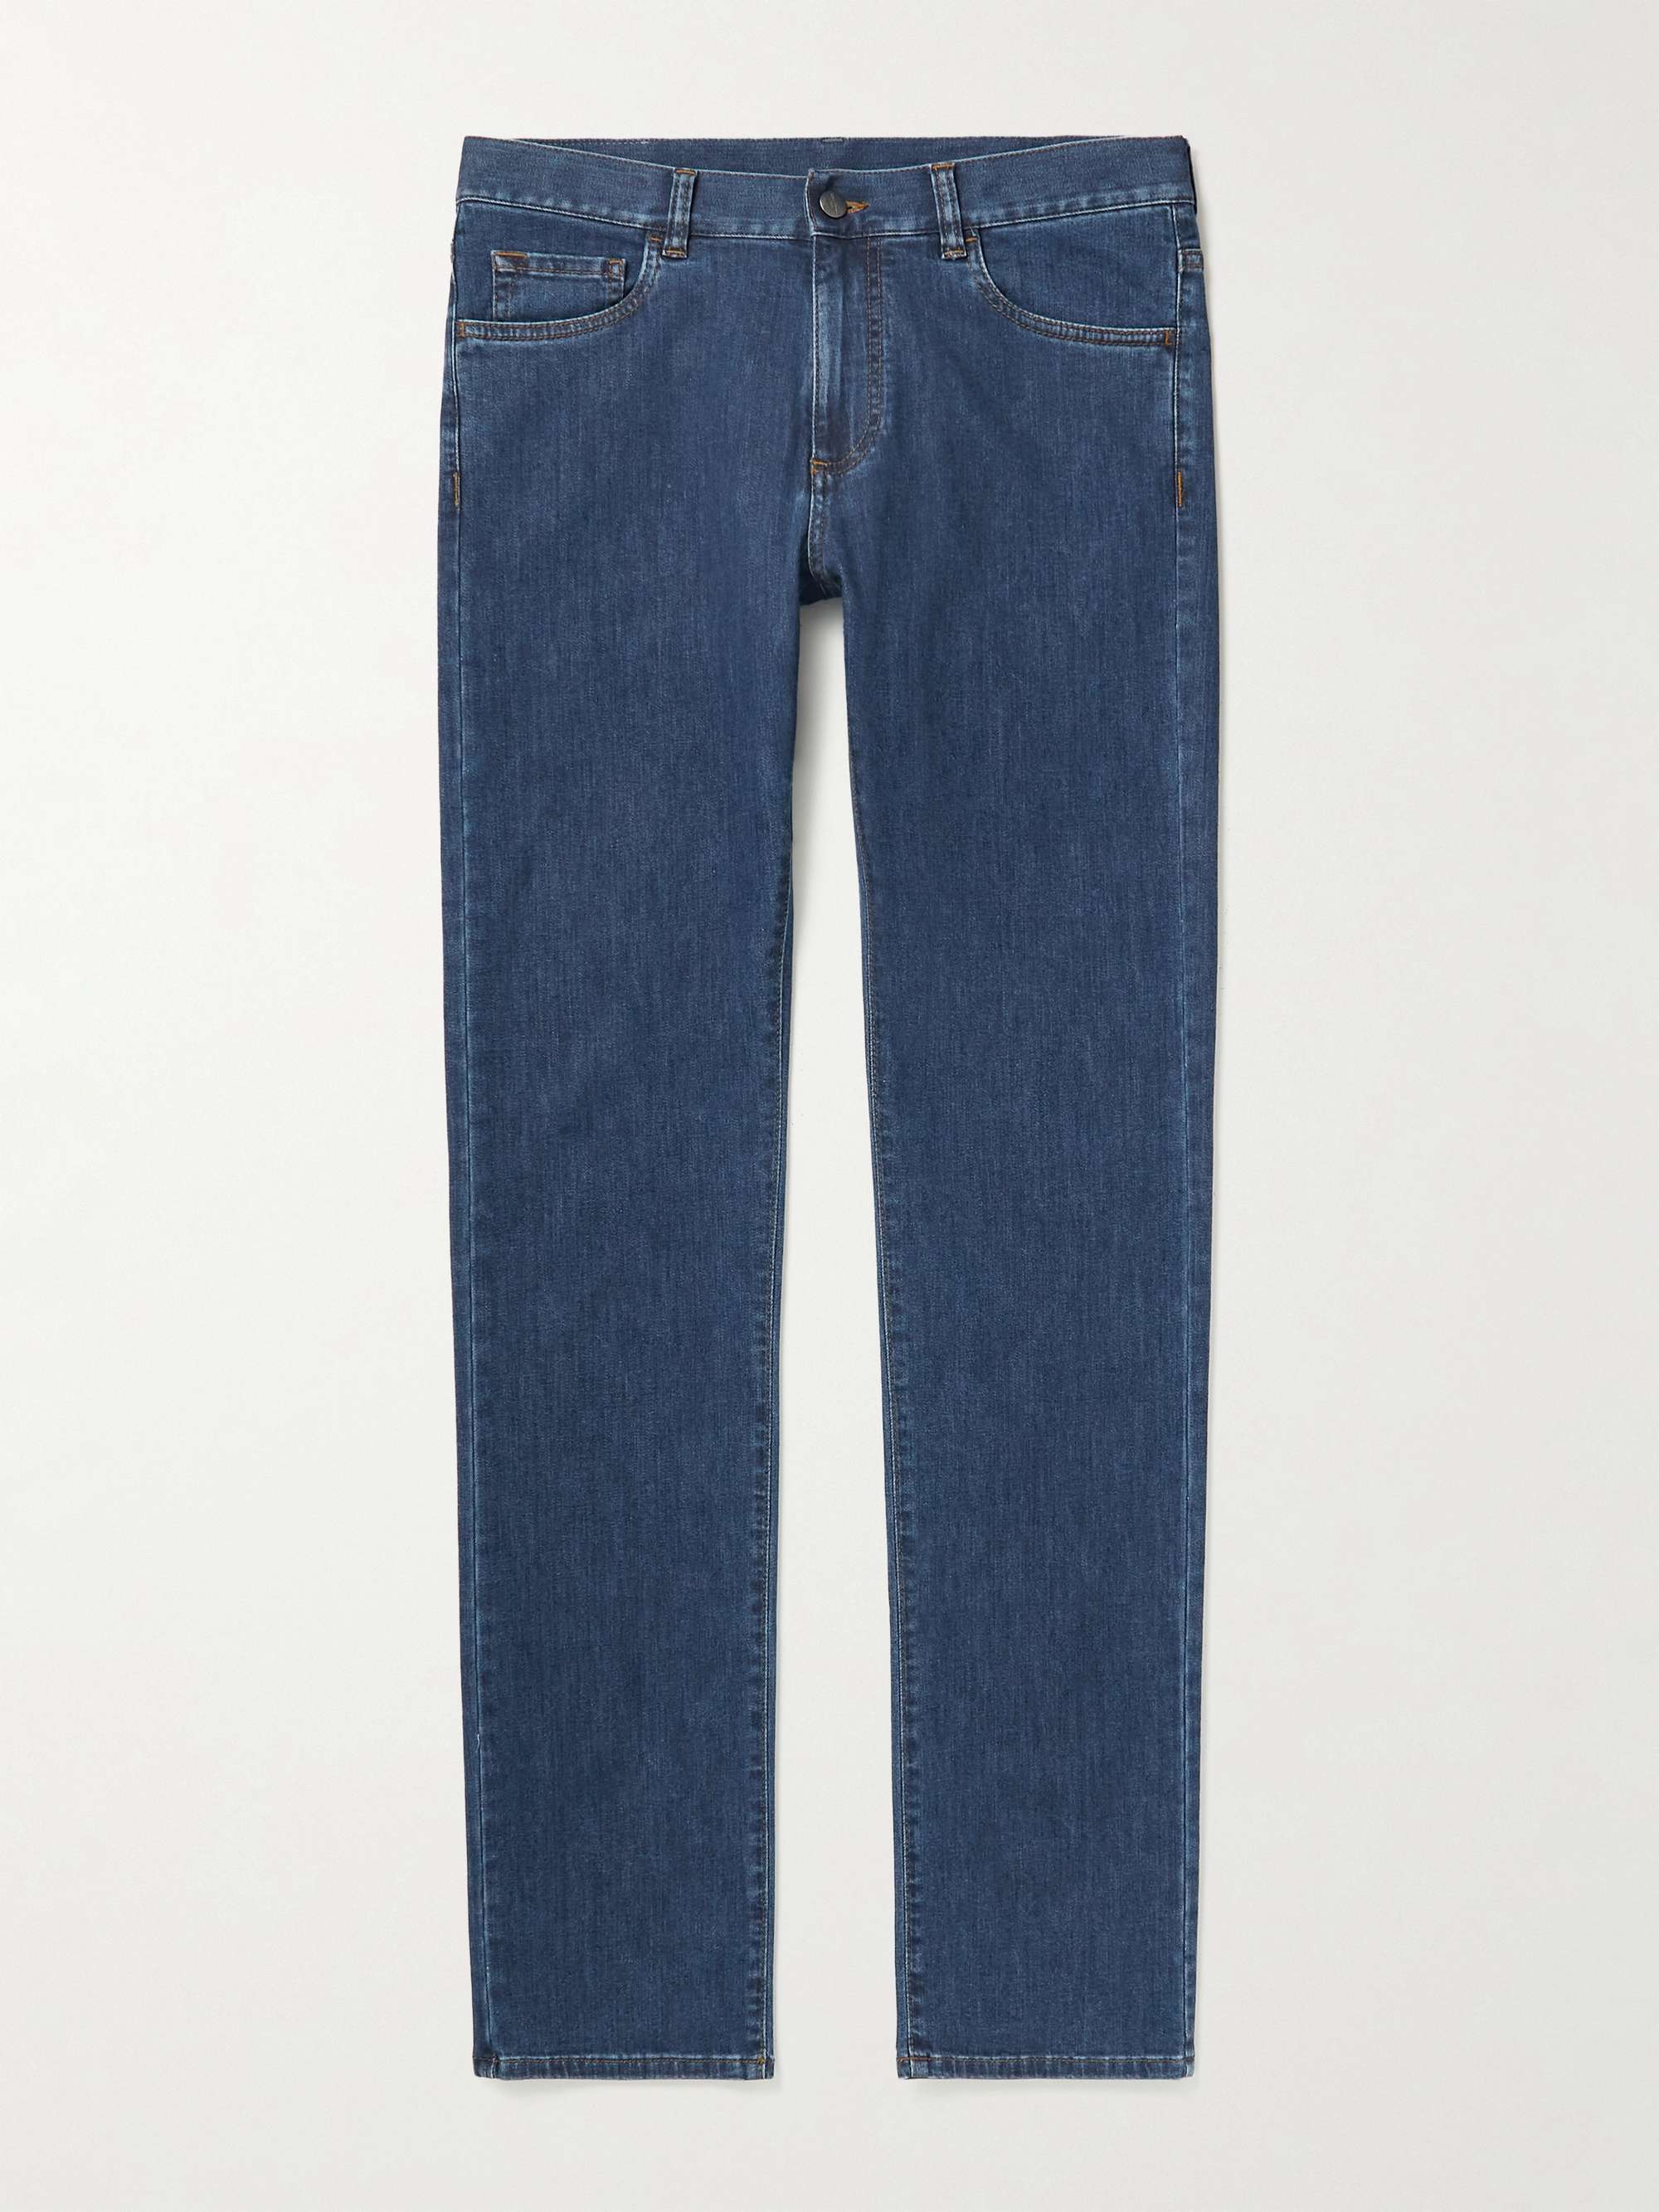 CANALI Slim-Fit Tapered Jeans for Men | MR PORTER